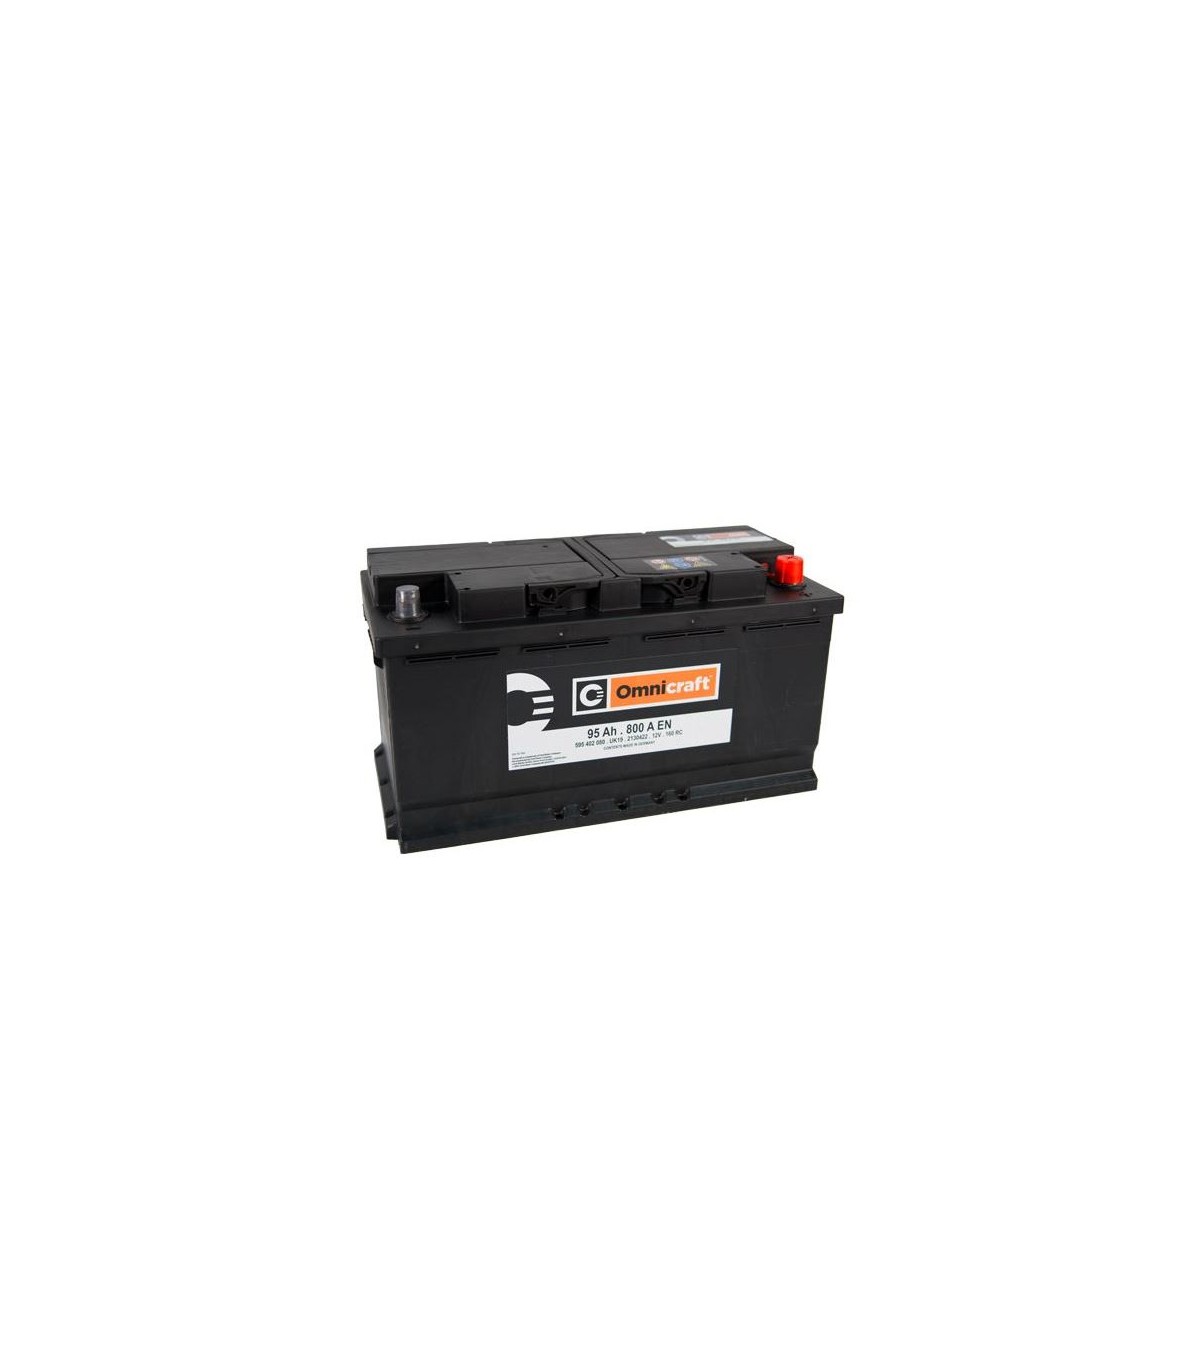 OMNICRAFT - Batería de coche - 95Ah/800A